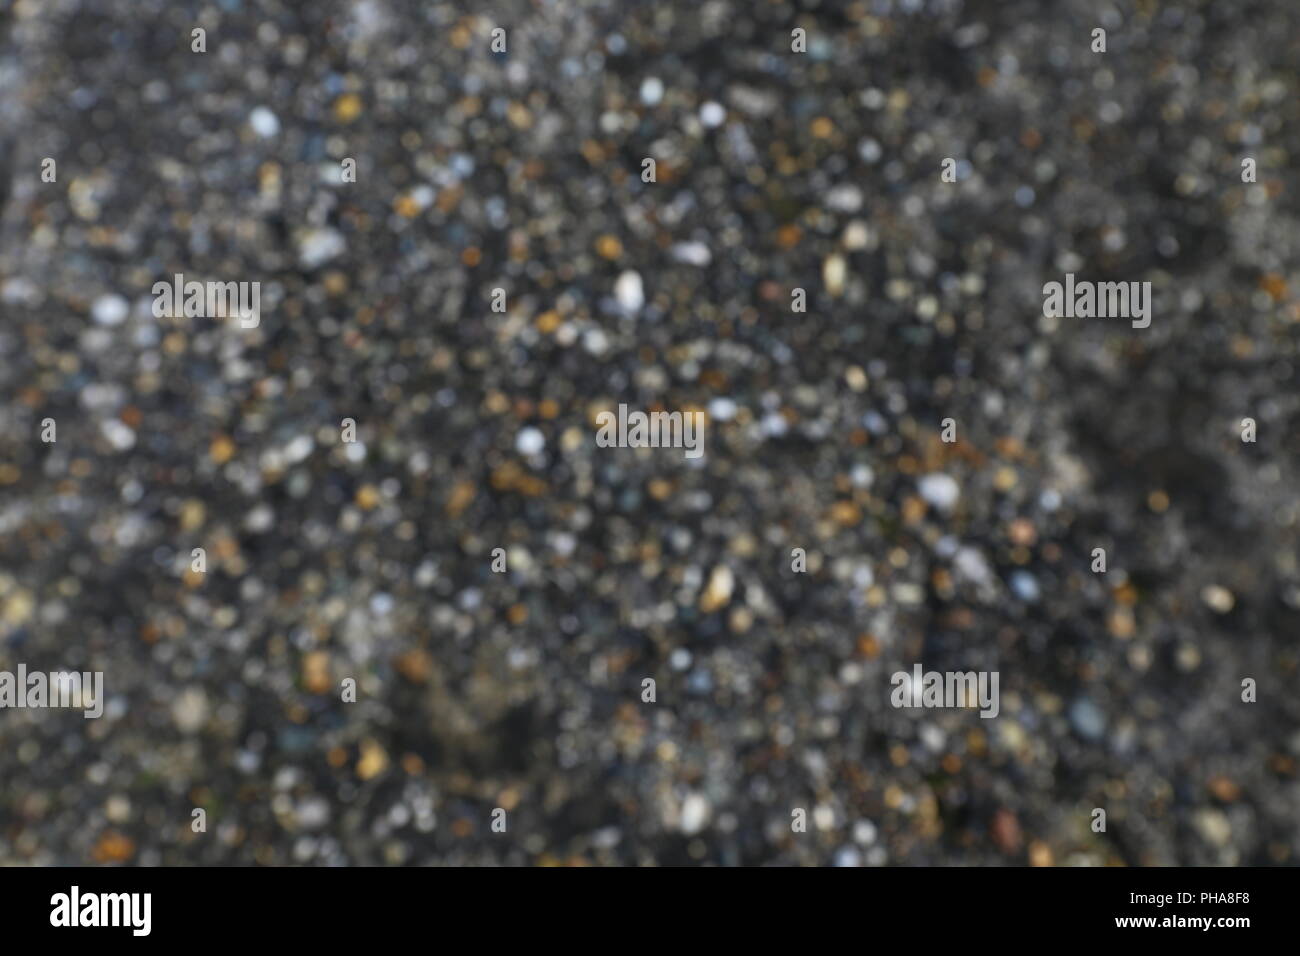 Blurred background motif: small pebbles in dark soil Stock Photo